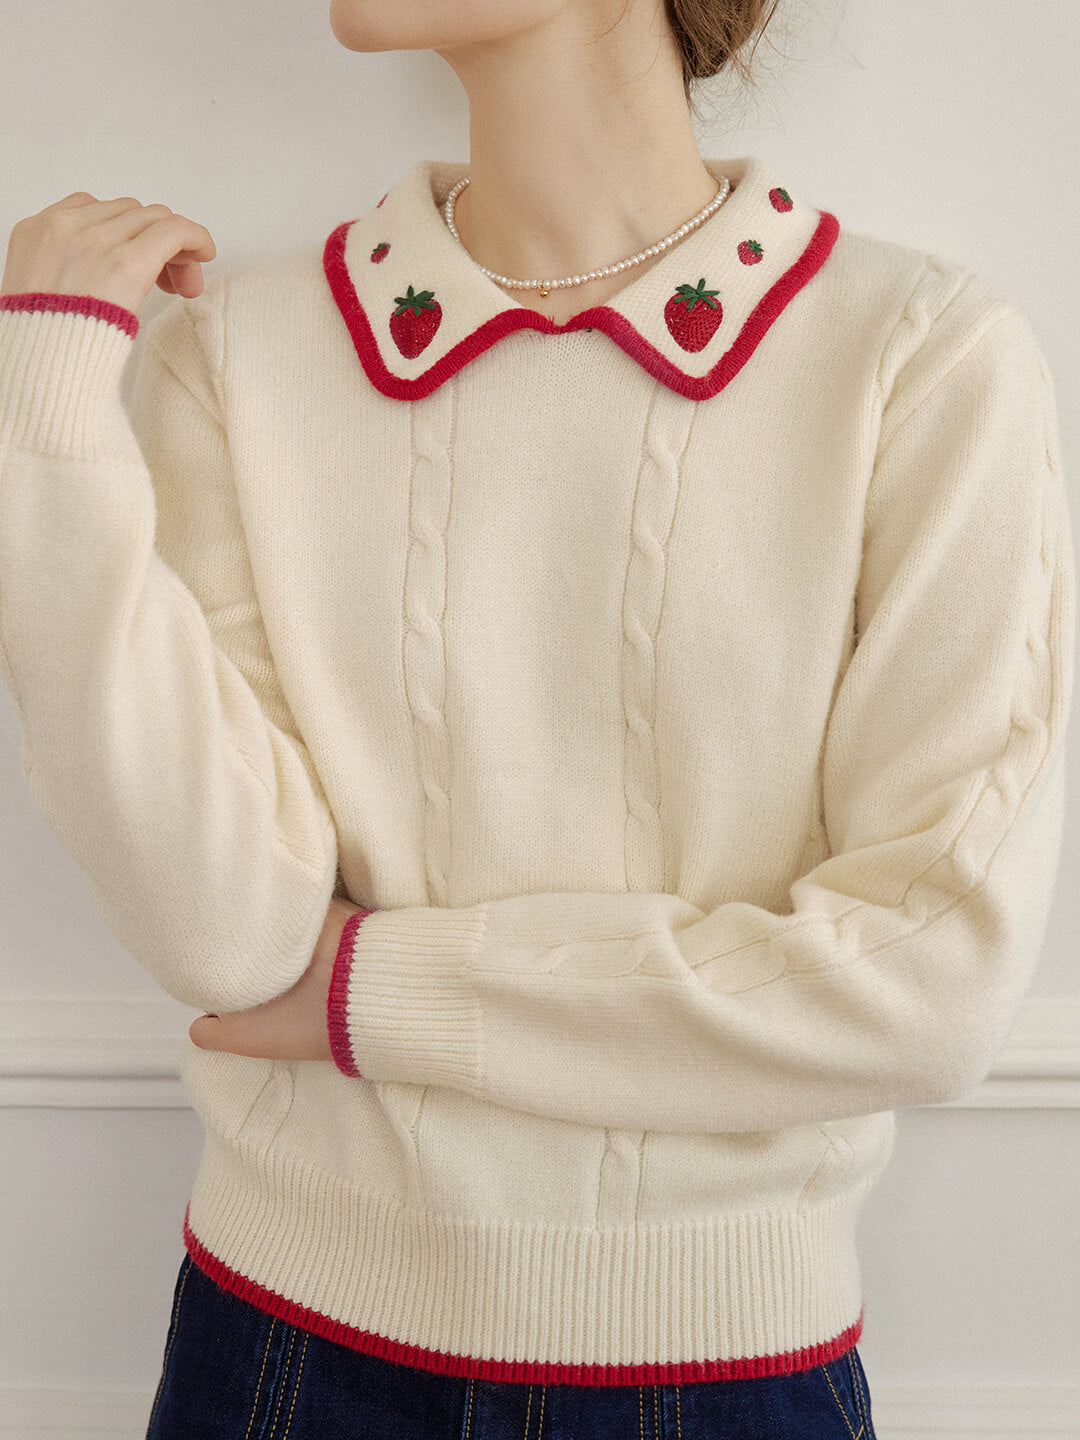 Simpleretro Maeve 草莓刺繡Polo領絞花針織白色毛衣-7